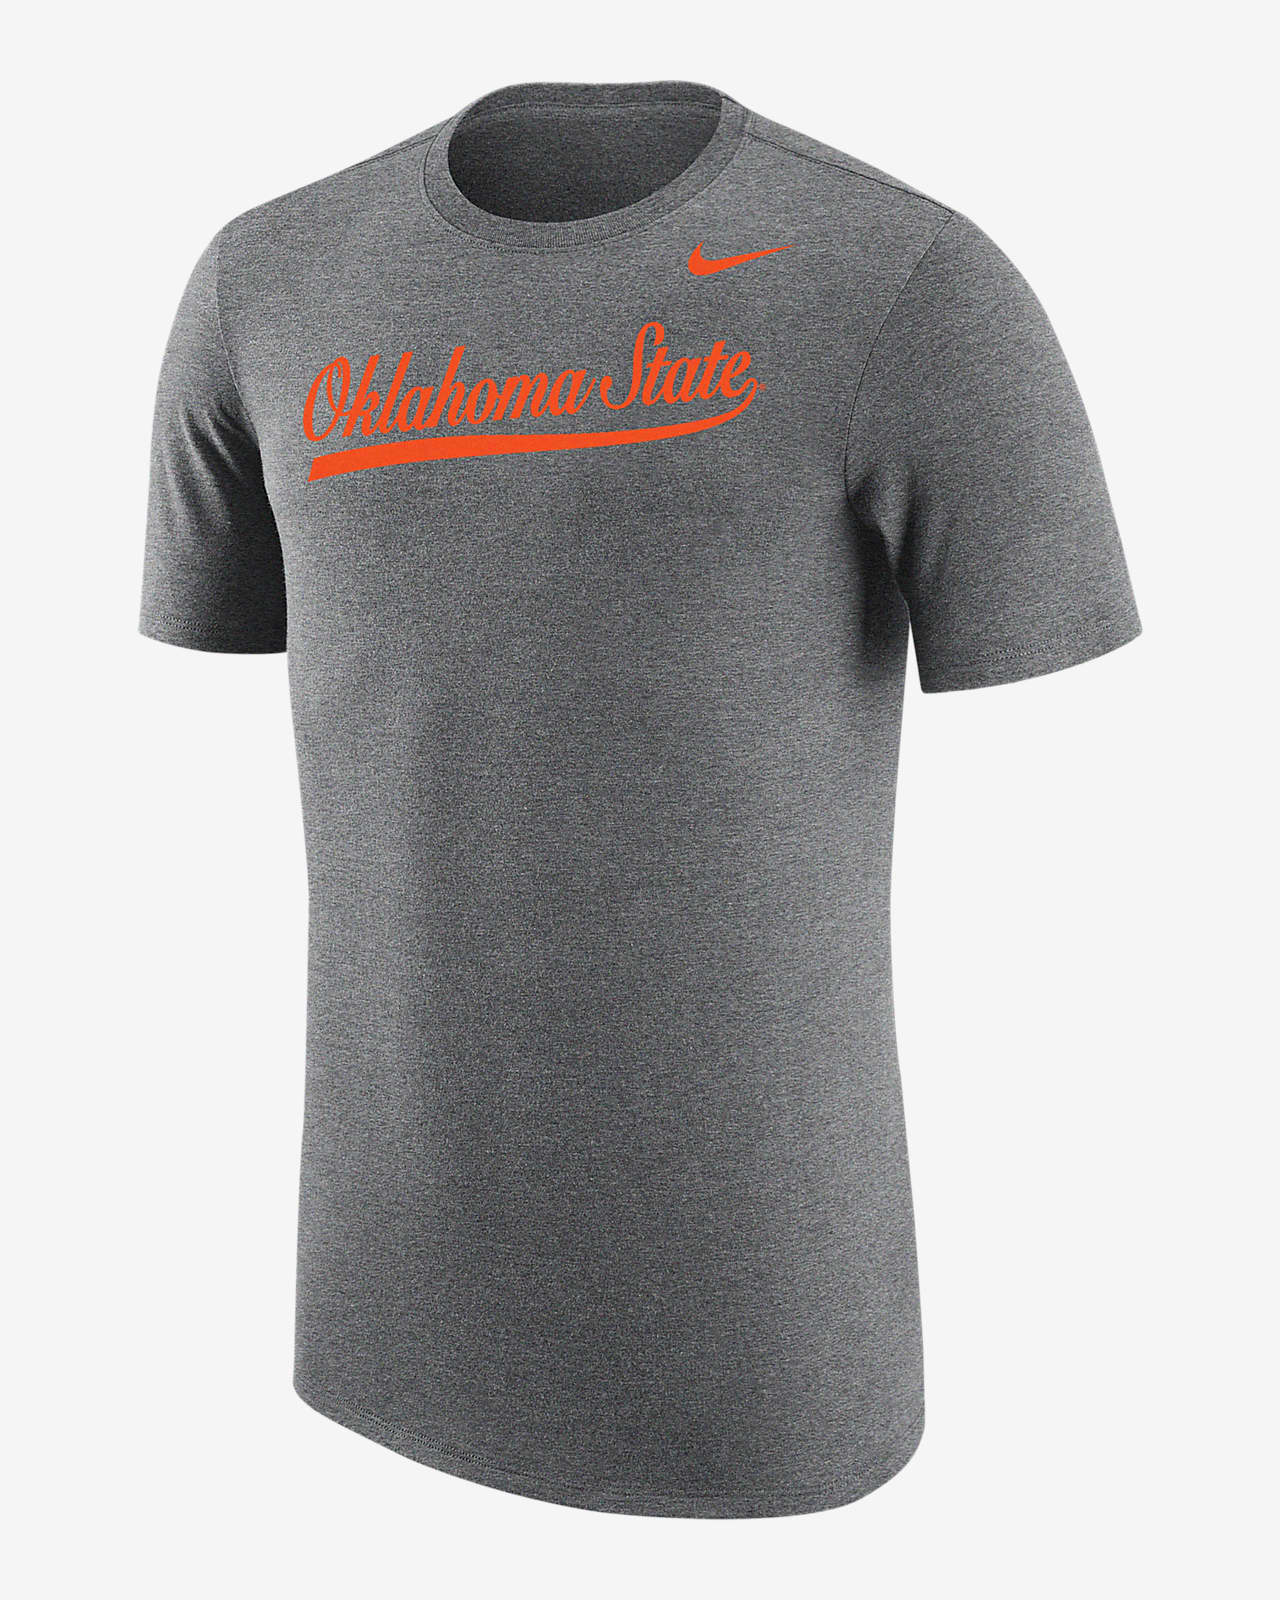 Oklahoma State Men's Nike College T-Shirt